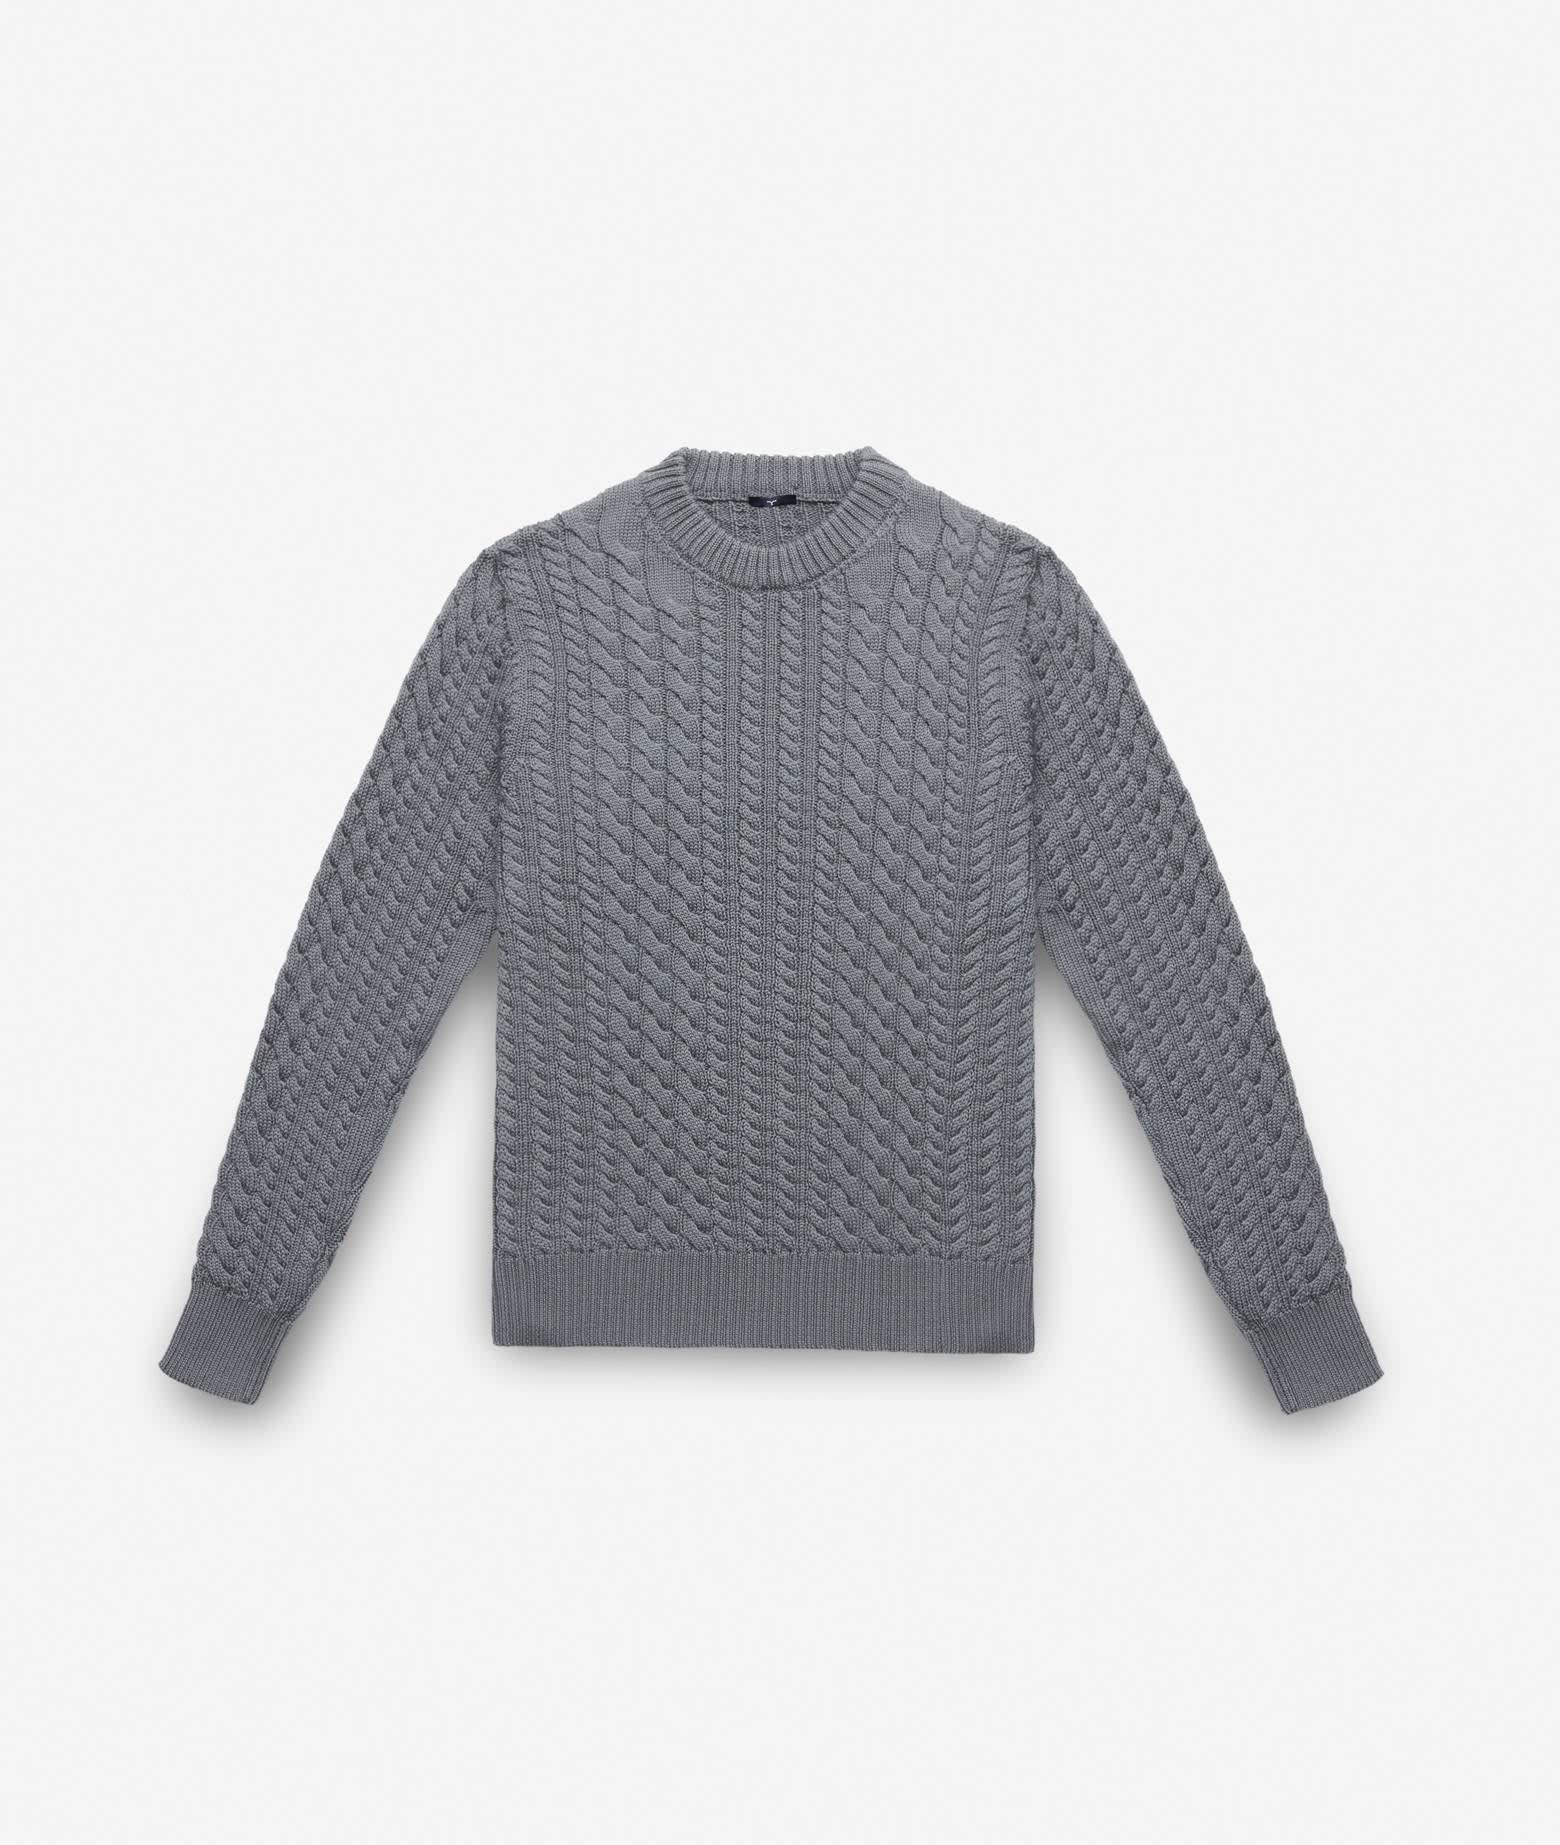 Larusmiani Cable Knit Sweater Col Du Pillon Sweater In Lightgray